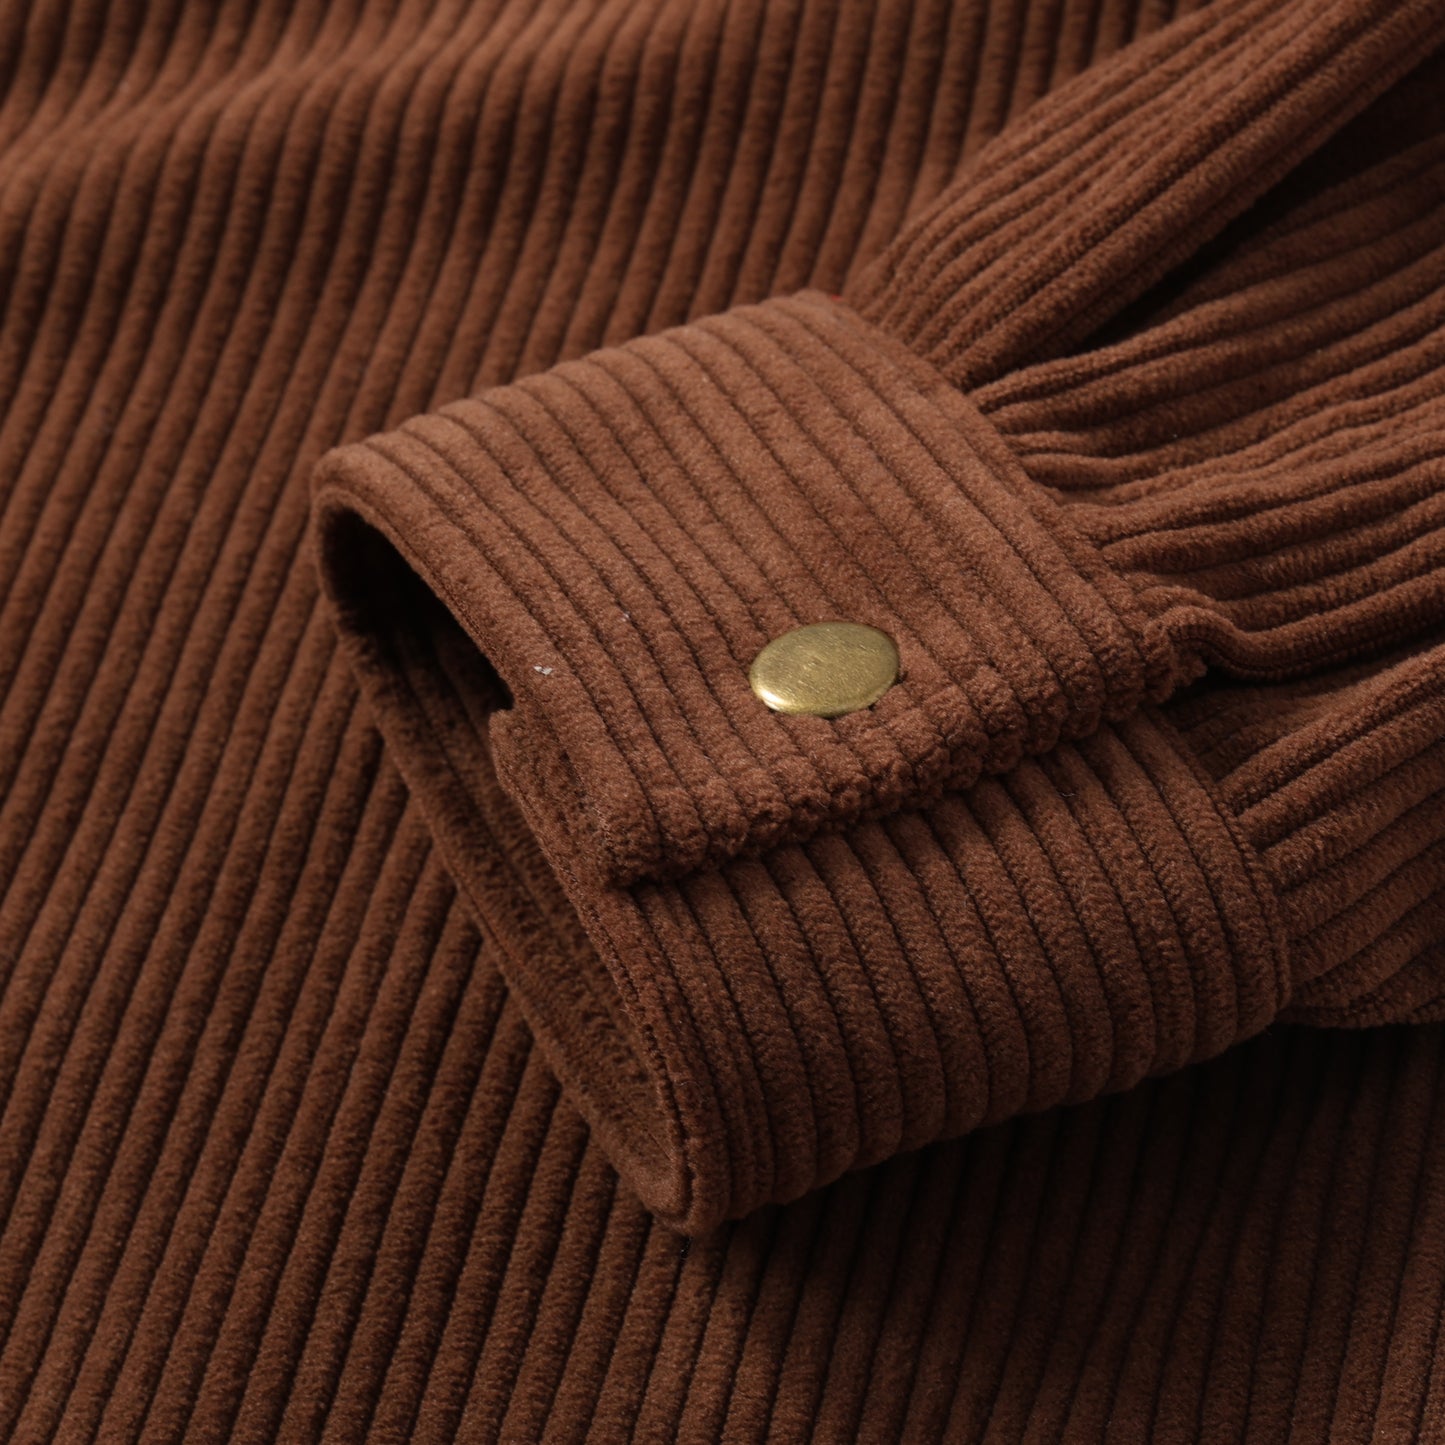 Corduroy Plain Color Snap Closure Long Sleeve Shirt-Coffee